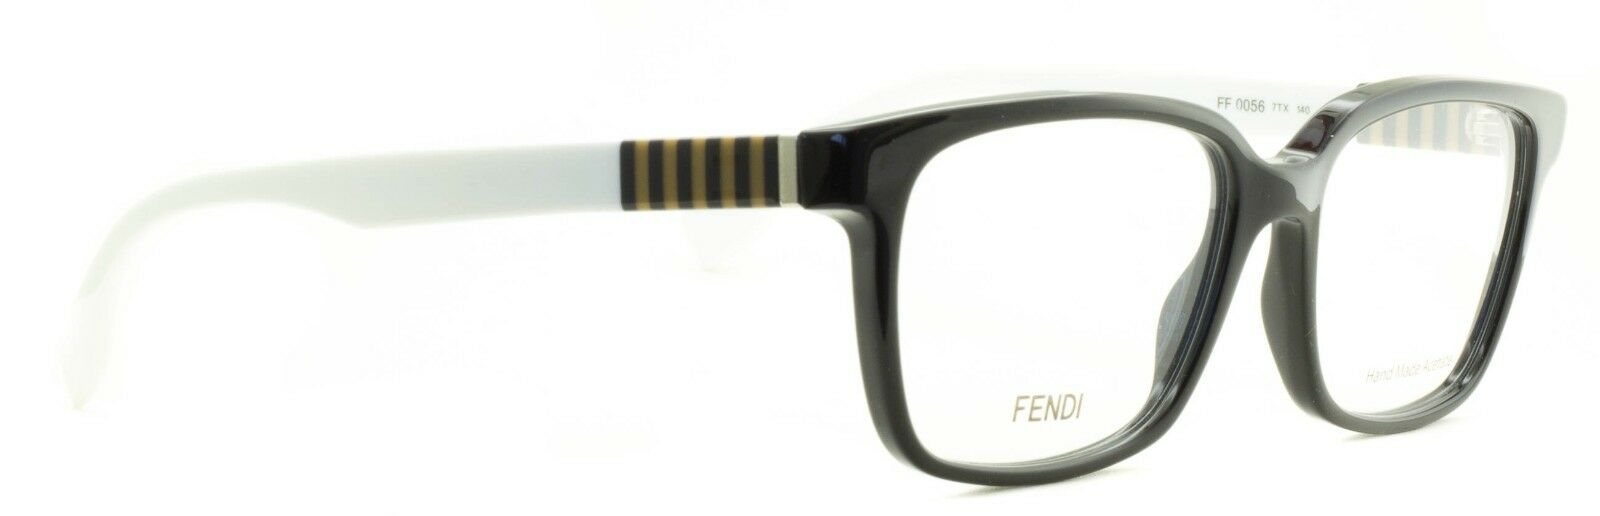 FENDI FF 0056 7TX Eyewear RX Optical FRAMES NEW Glasses Eyeglasses Italy - BNIB